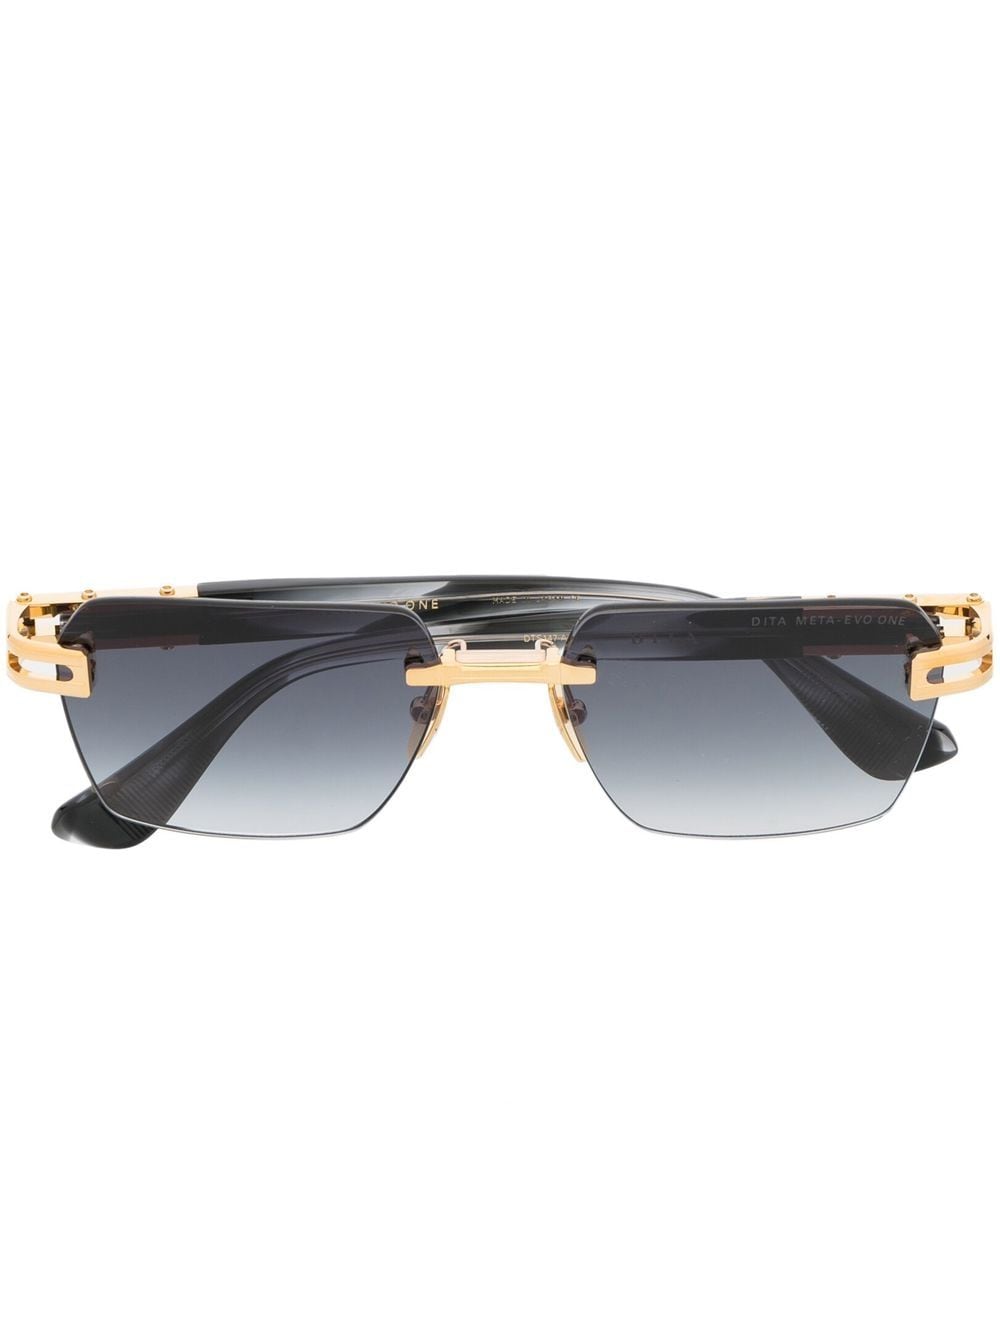 Image 1 of Dita Eyewear frameless titanium sunglasses